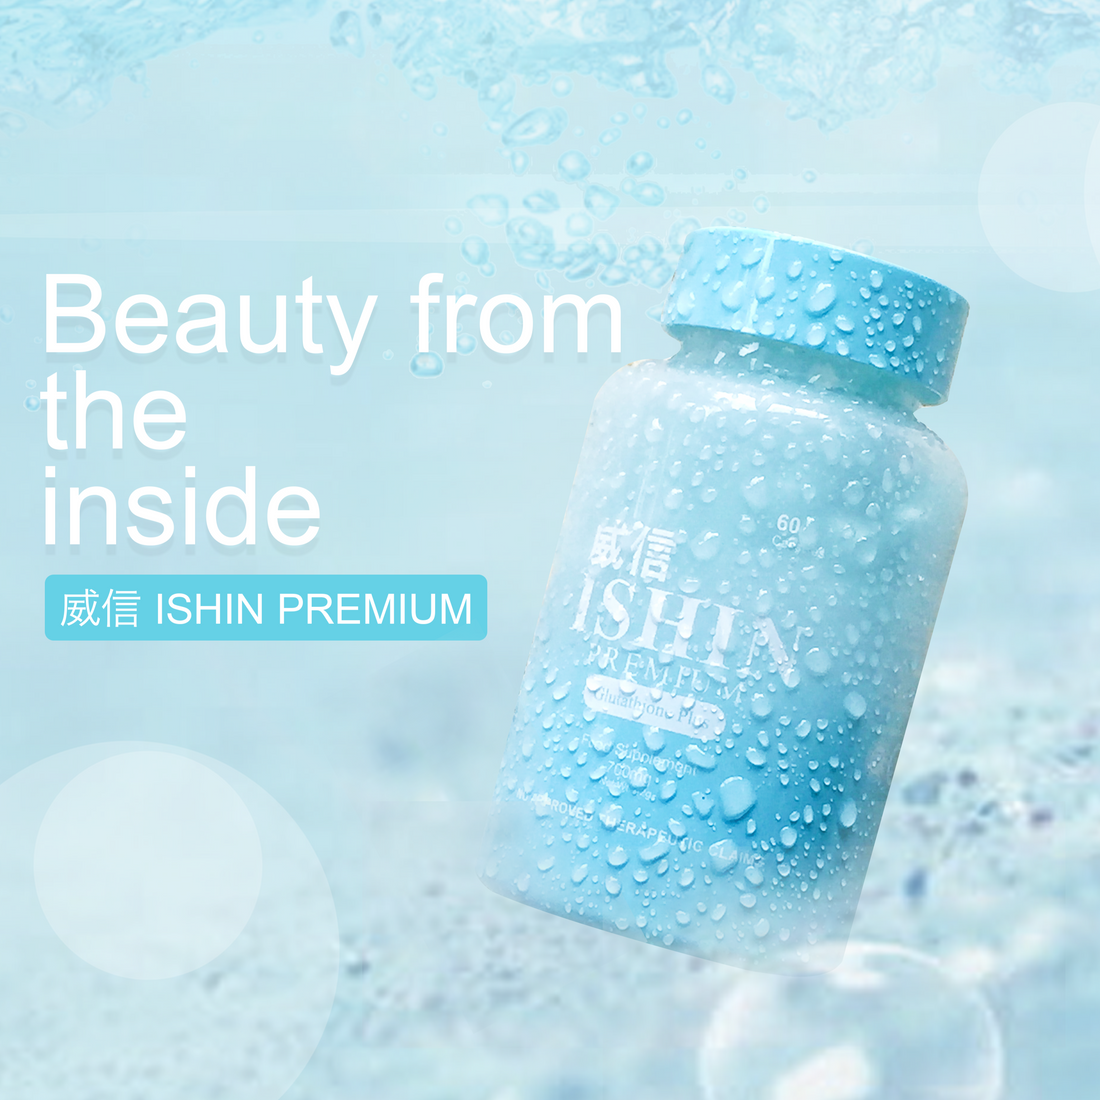 Ishin Premium Triple Glutathione Plus - True Beauty Skin Essentials